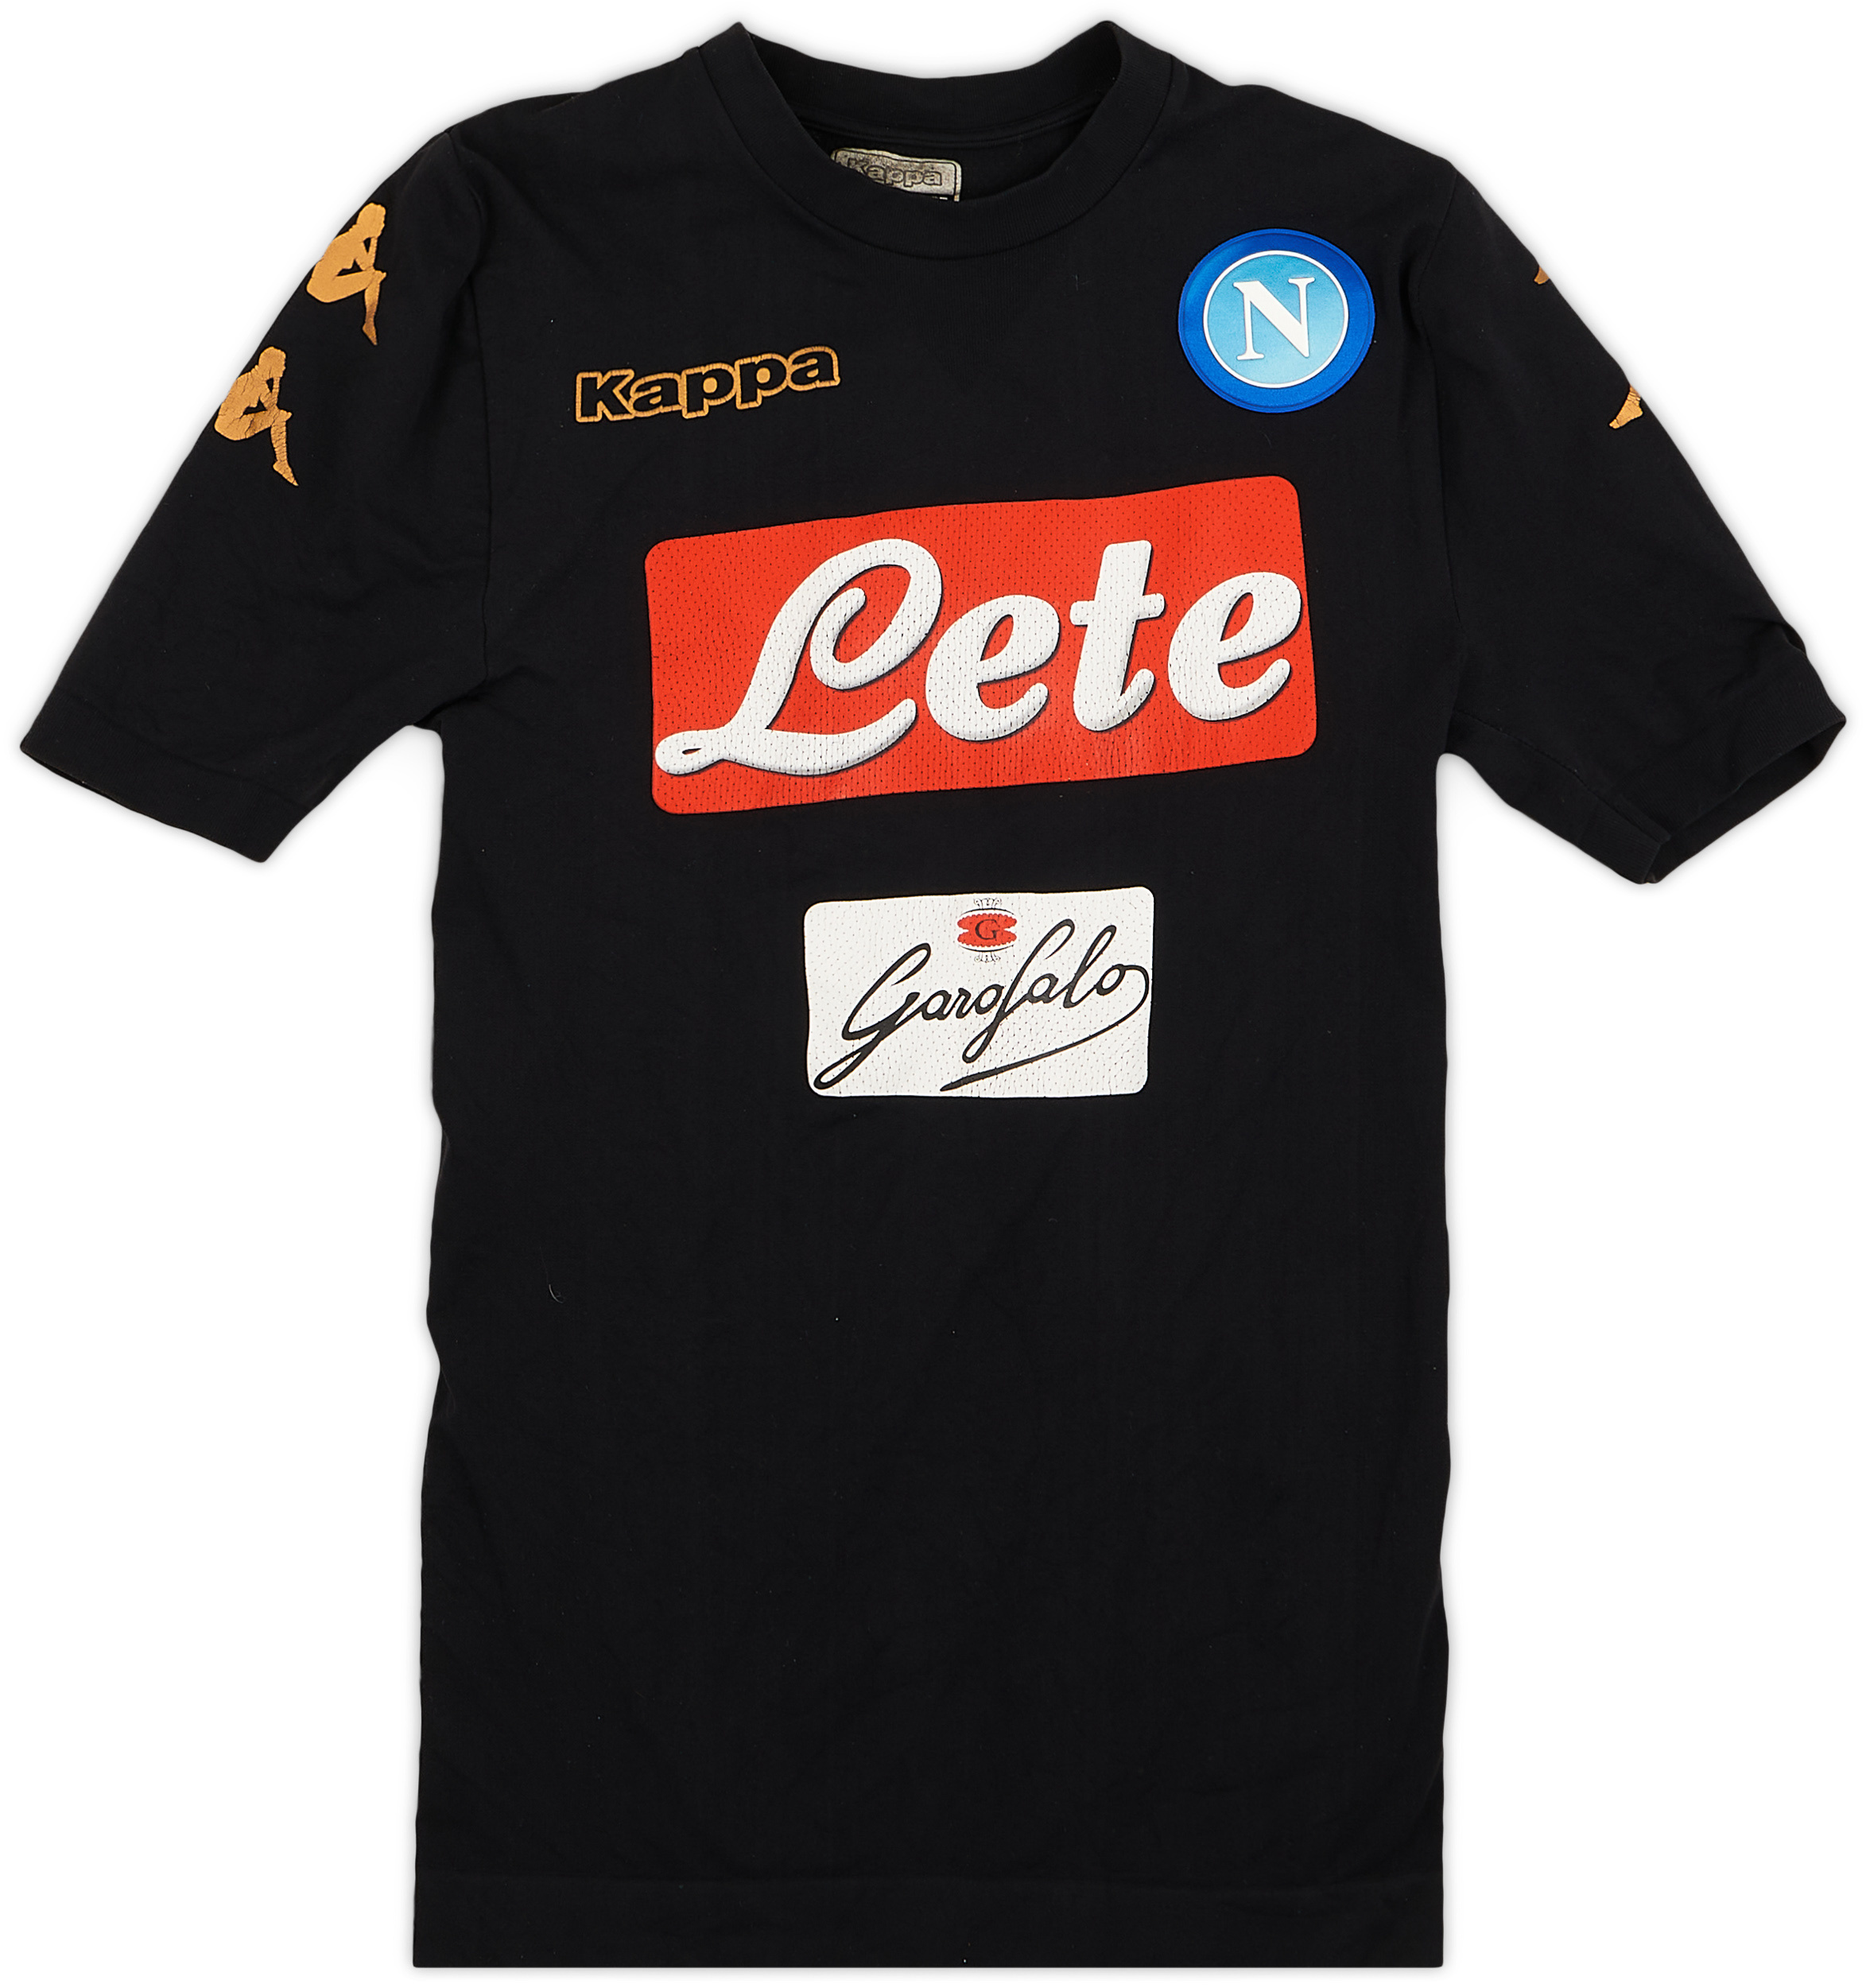 Napoli  Third shirt (Original)